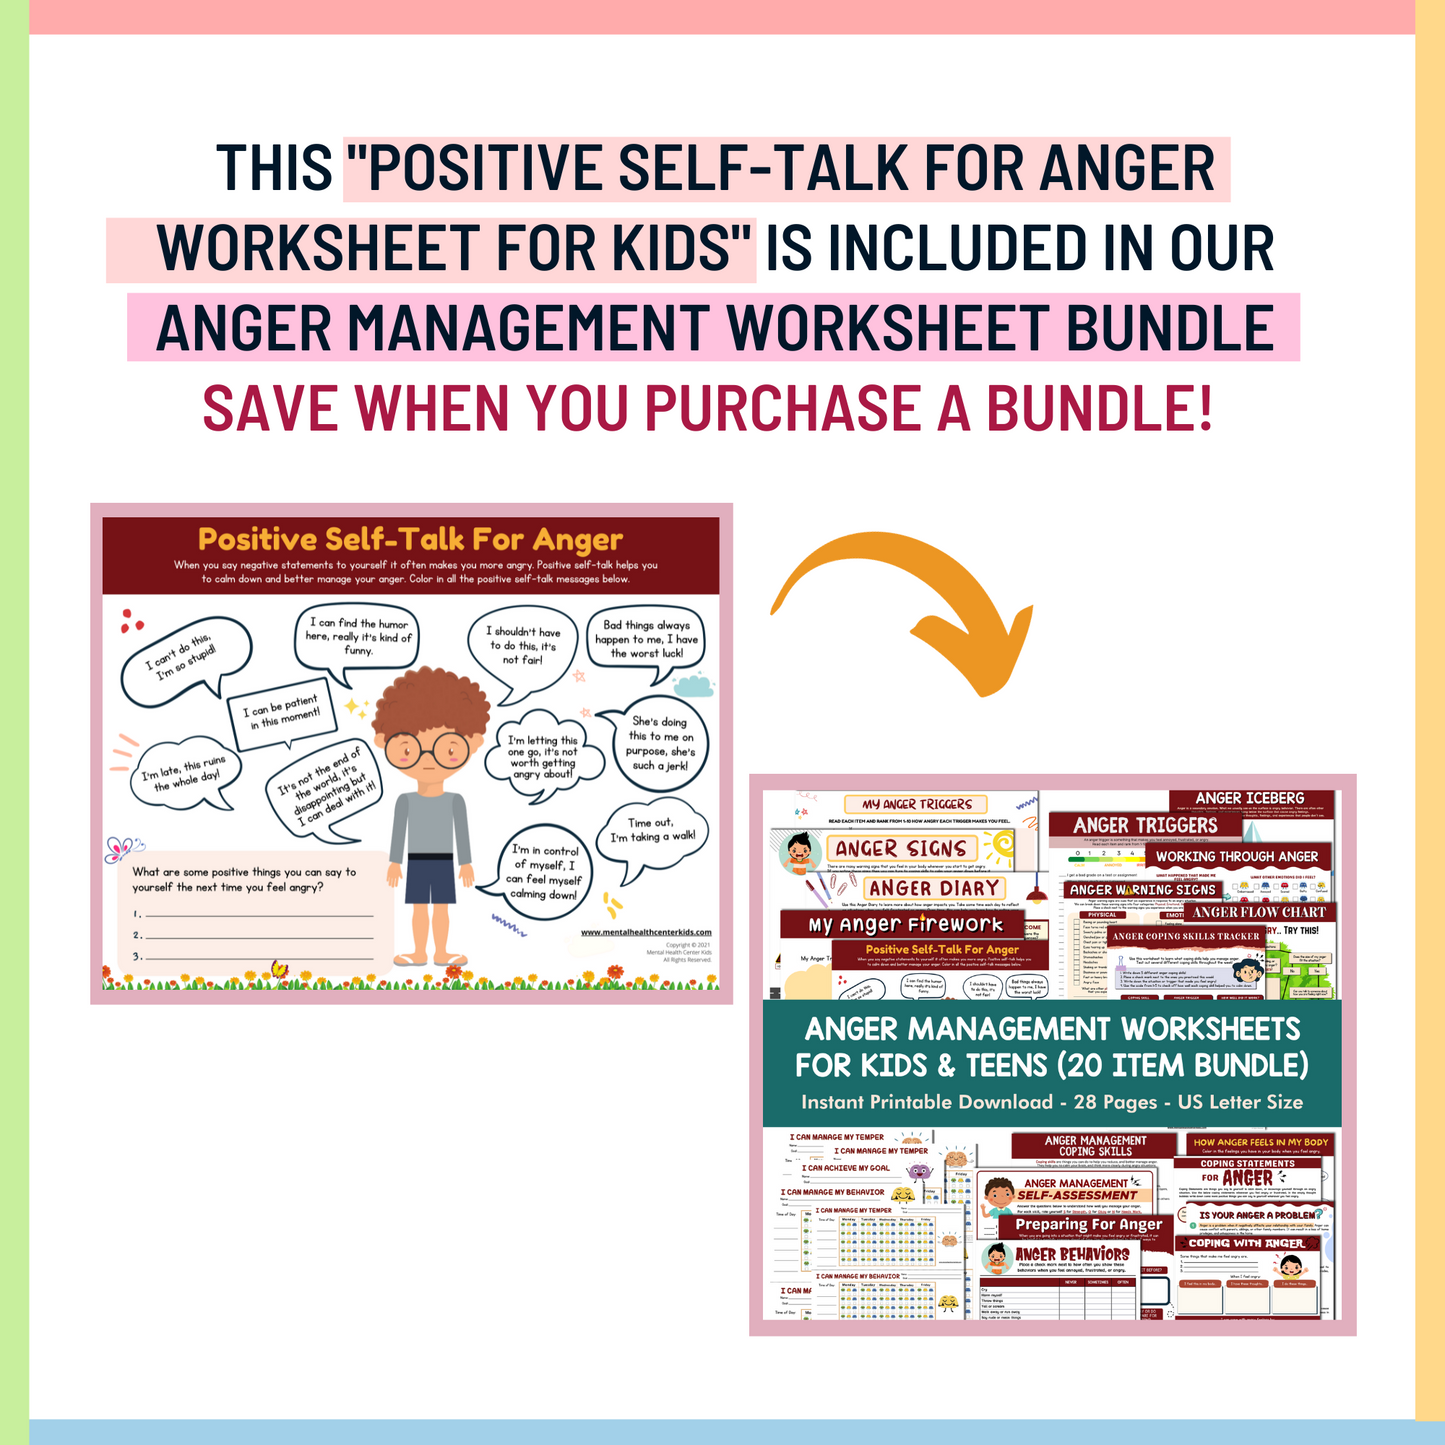 Positive Self-Talk for Anger